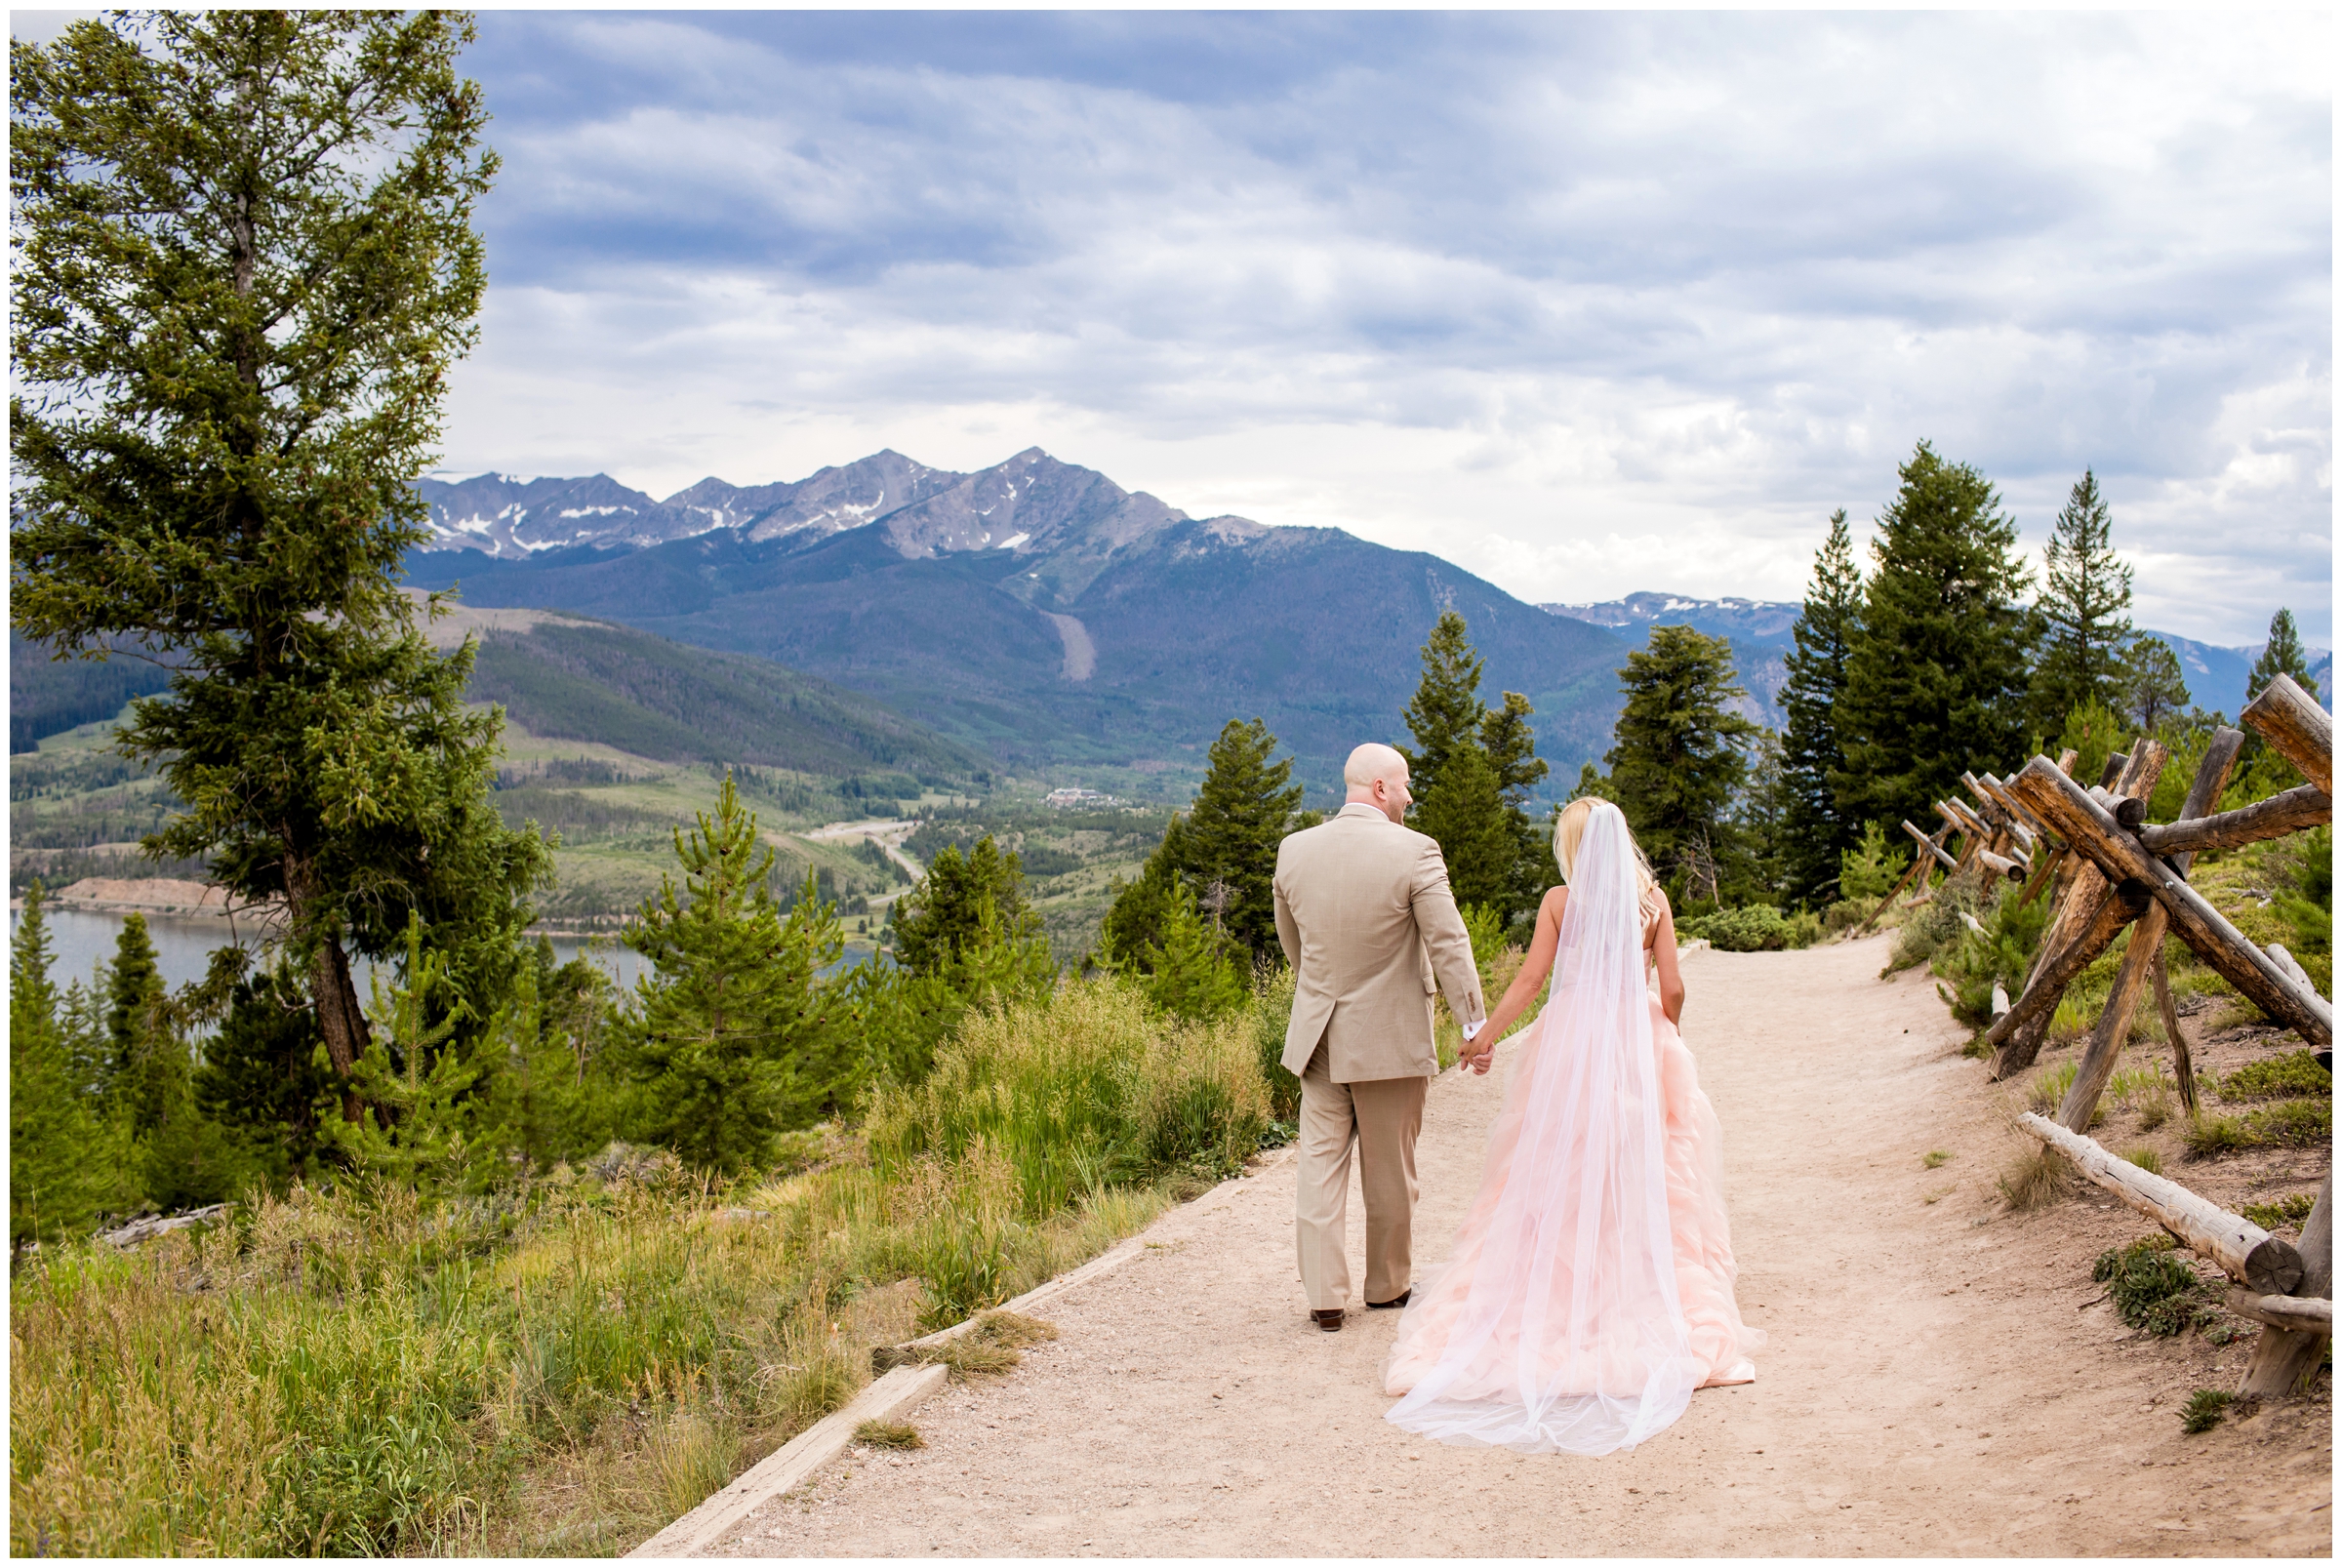 Sapphire Point wedding photography by Breckenridge Colorado elopement photographer Plum Pretty Photography